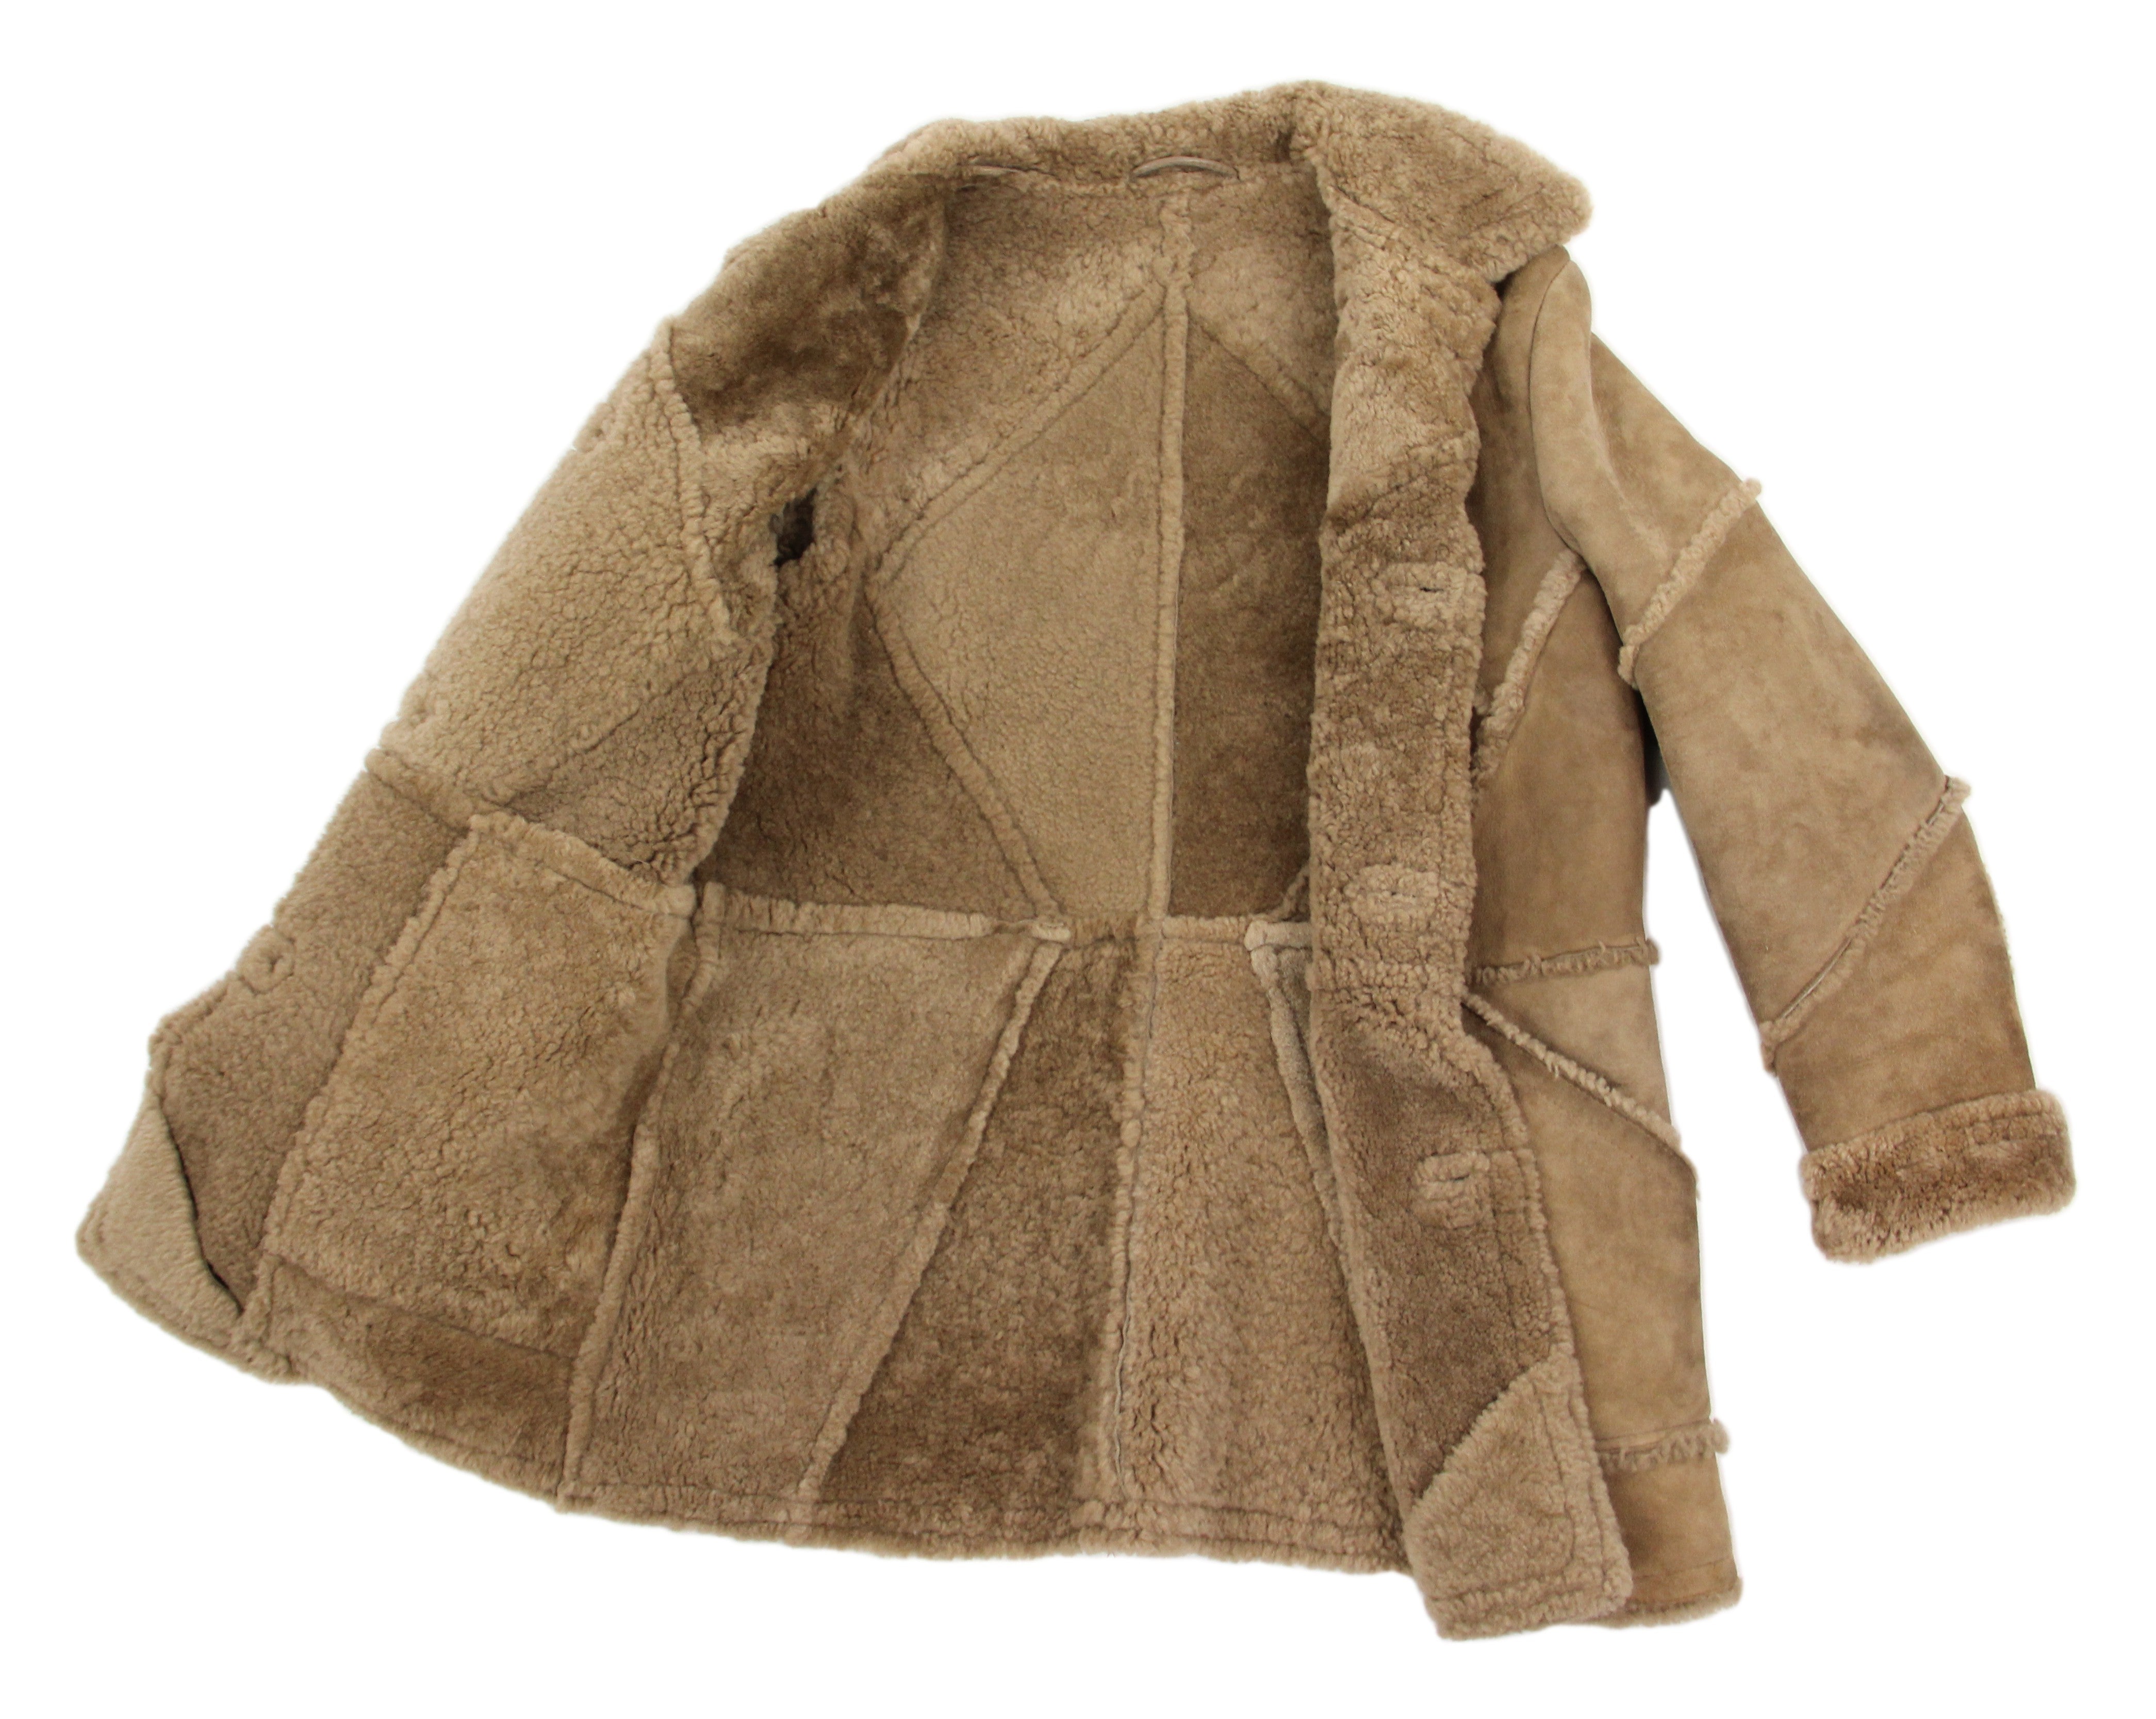 Stunning Men's Brown Shearling Coat, Size 40